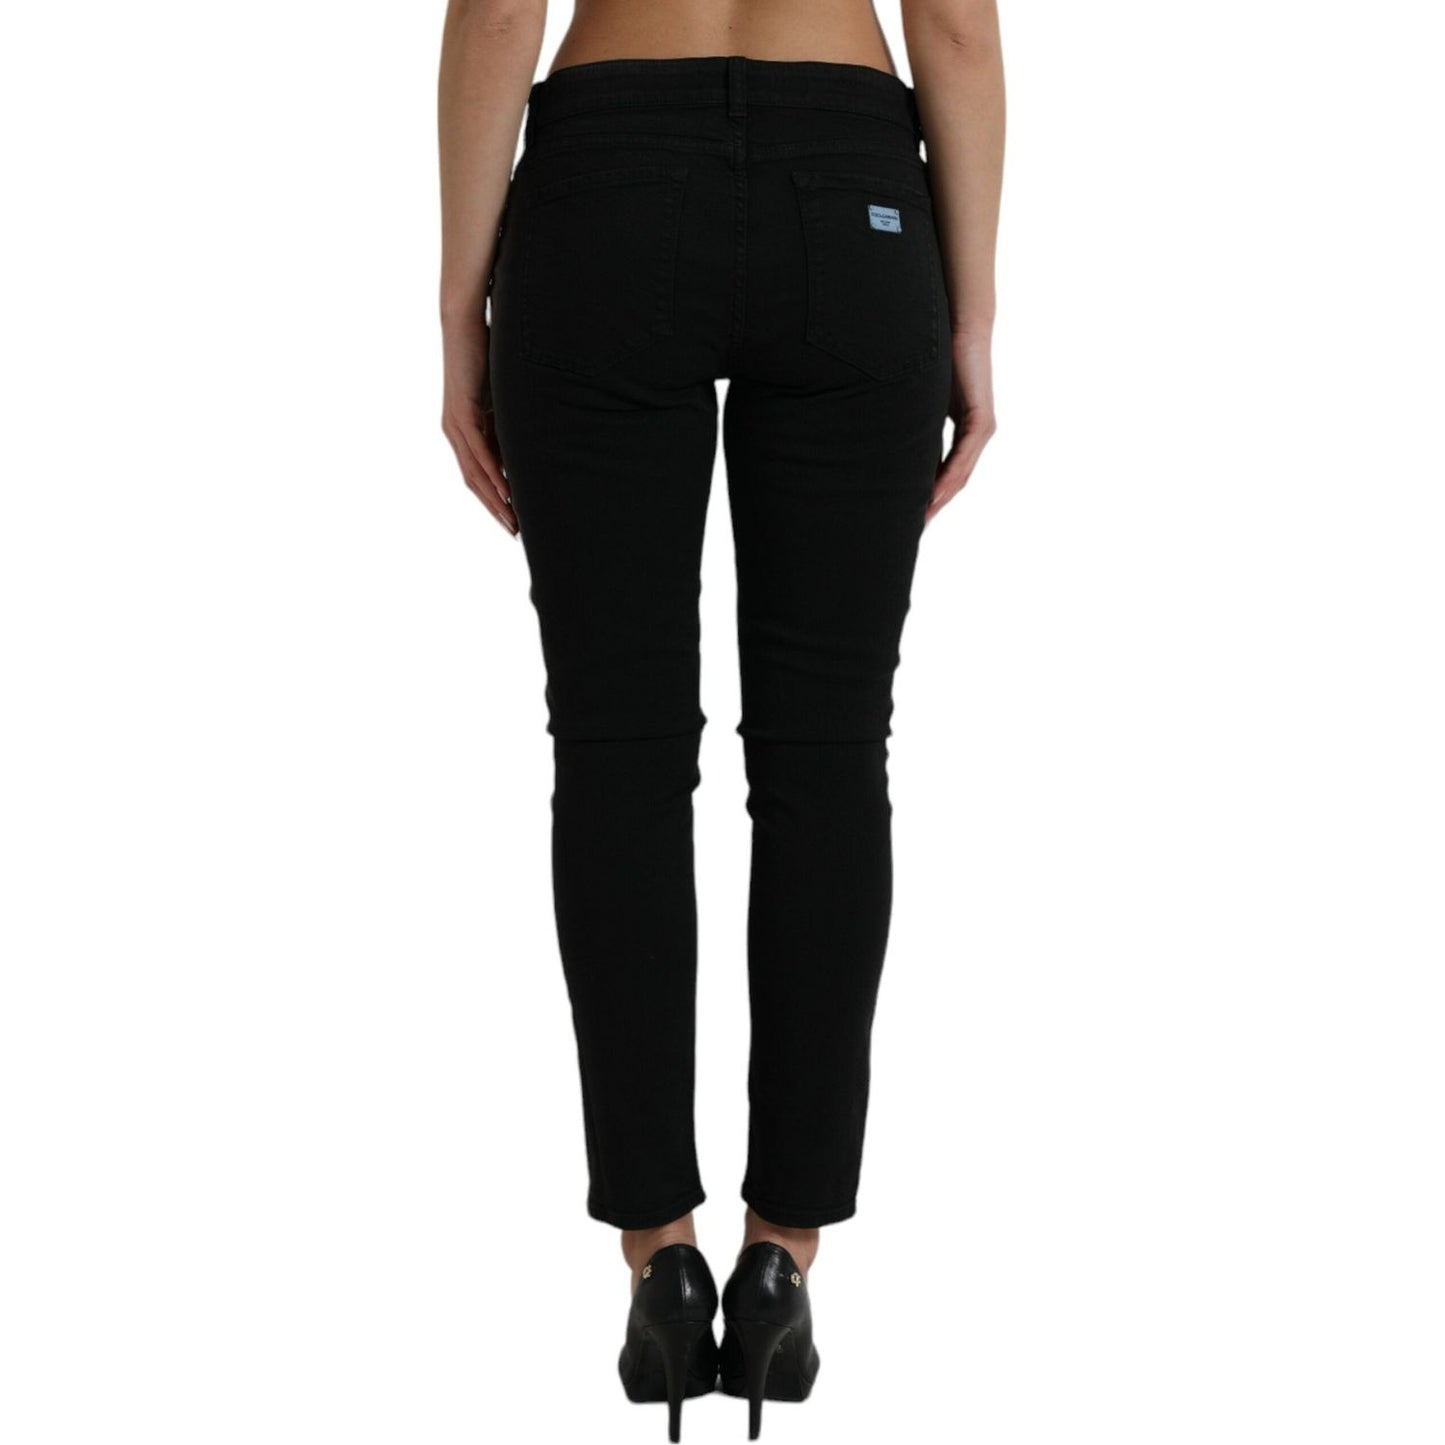 Dolce & Gabbana Elegant Black Mid Waist Stretch Jeans jeans-skinny-black-cotton-stretch-denim-skinny-jeans